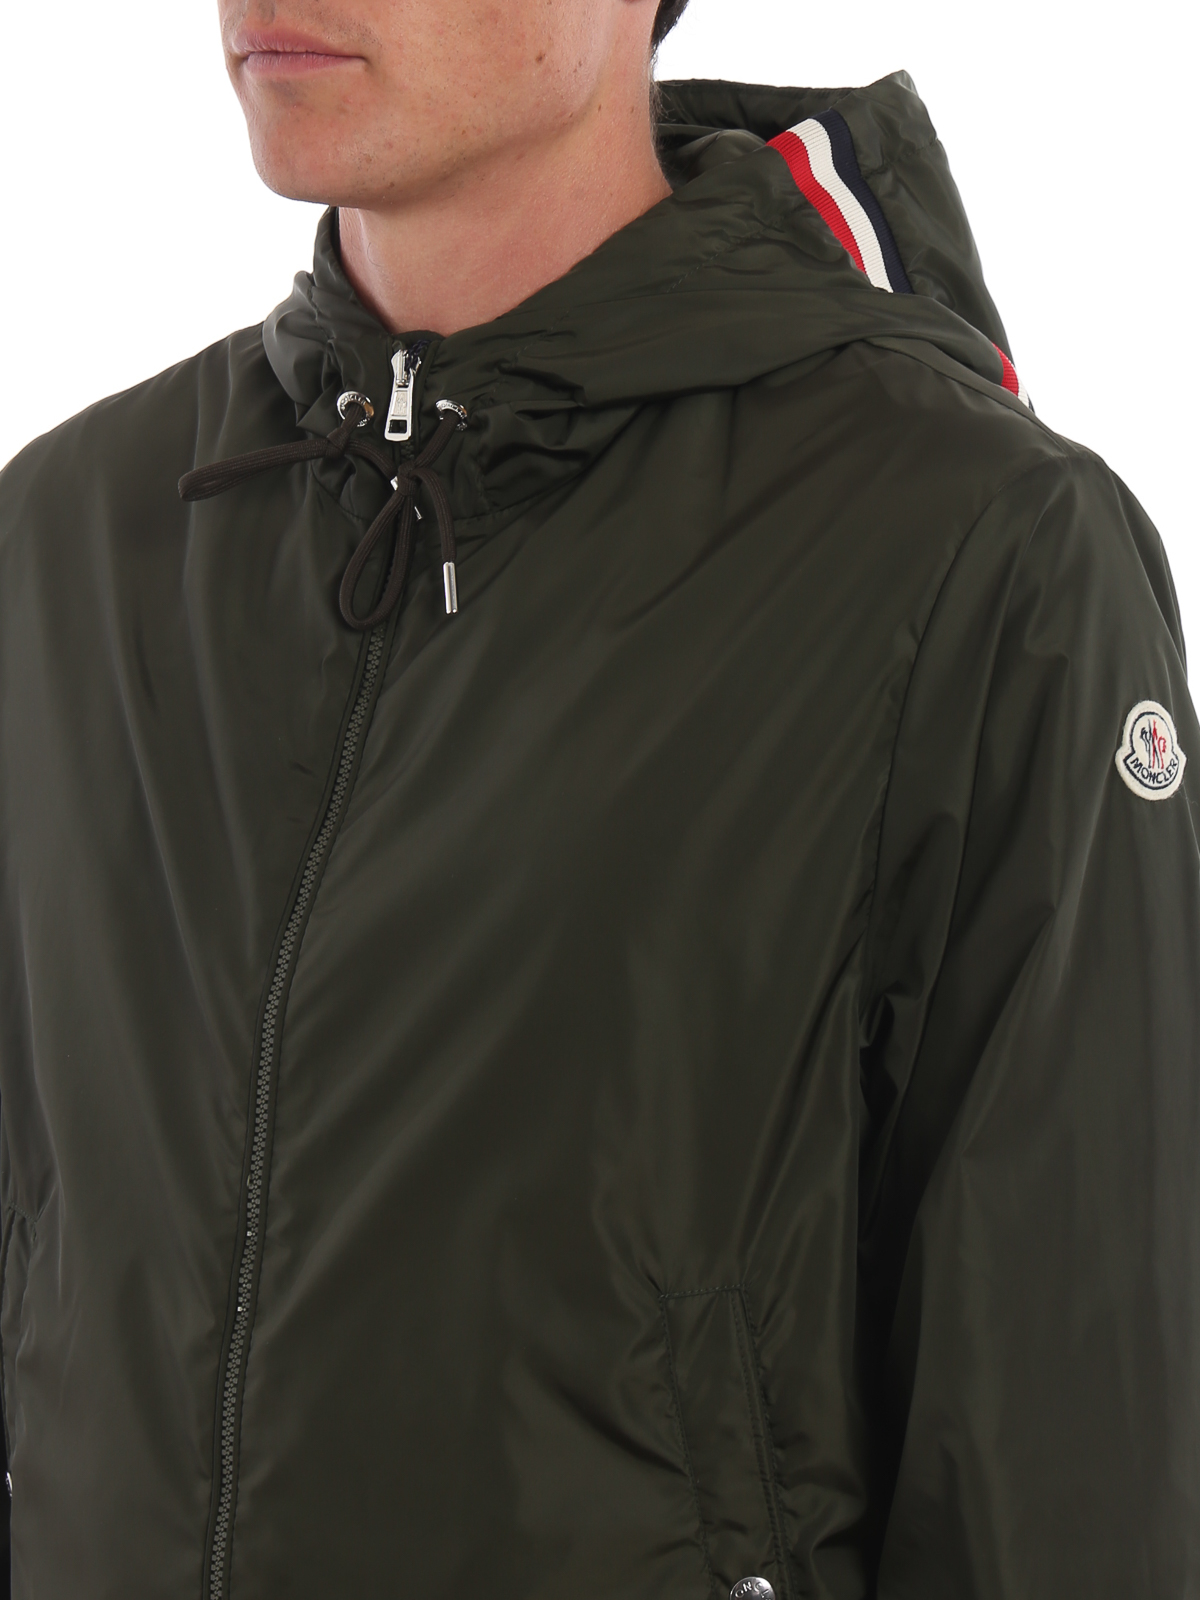 moncler grimpeurs hooded zip jacket